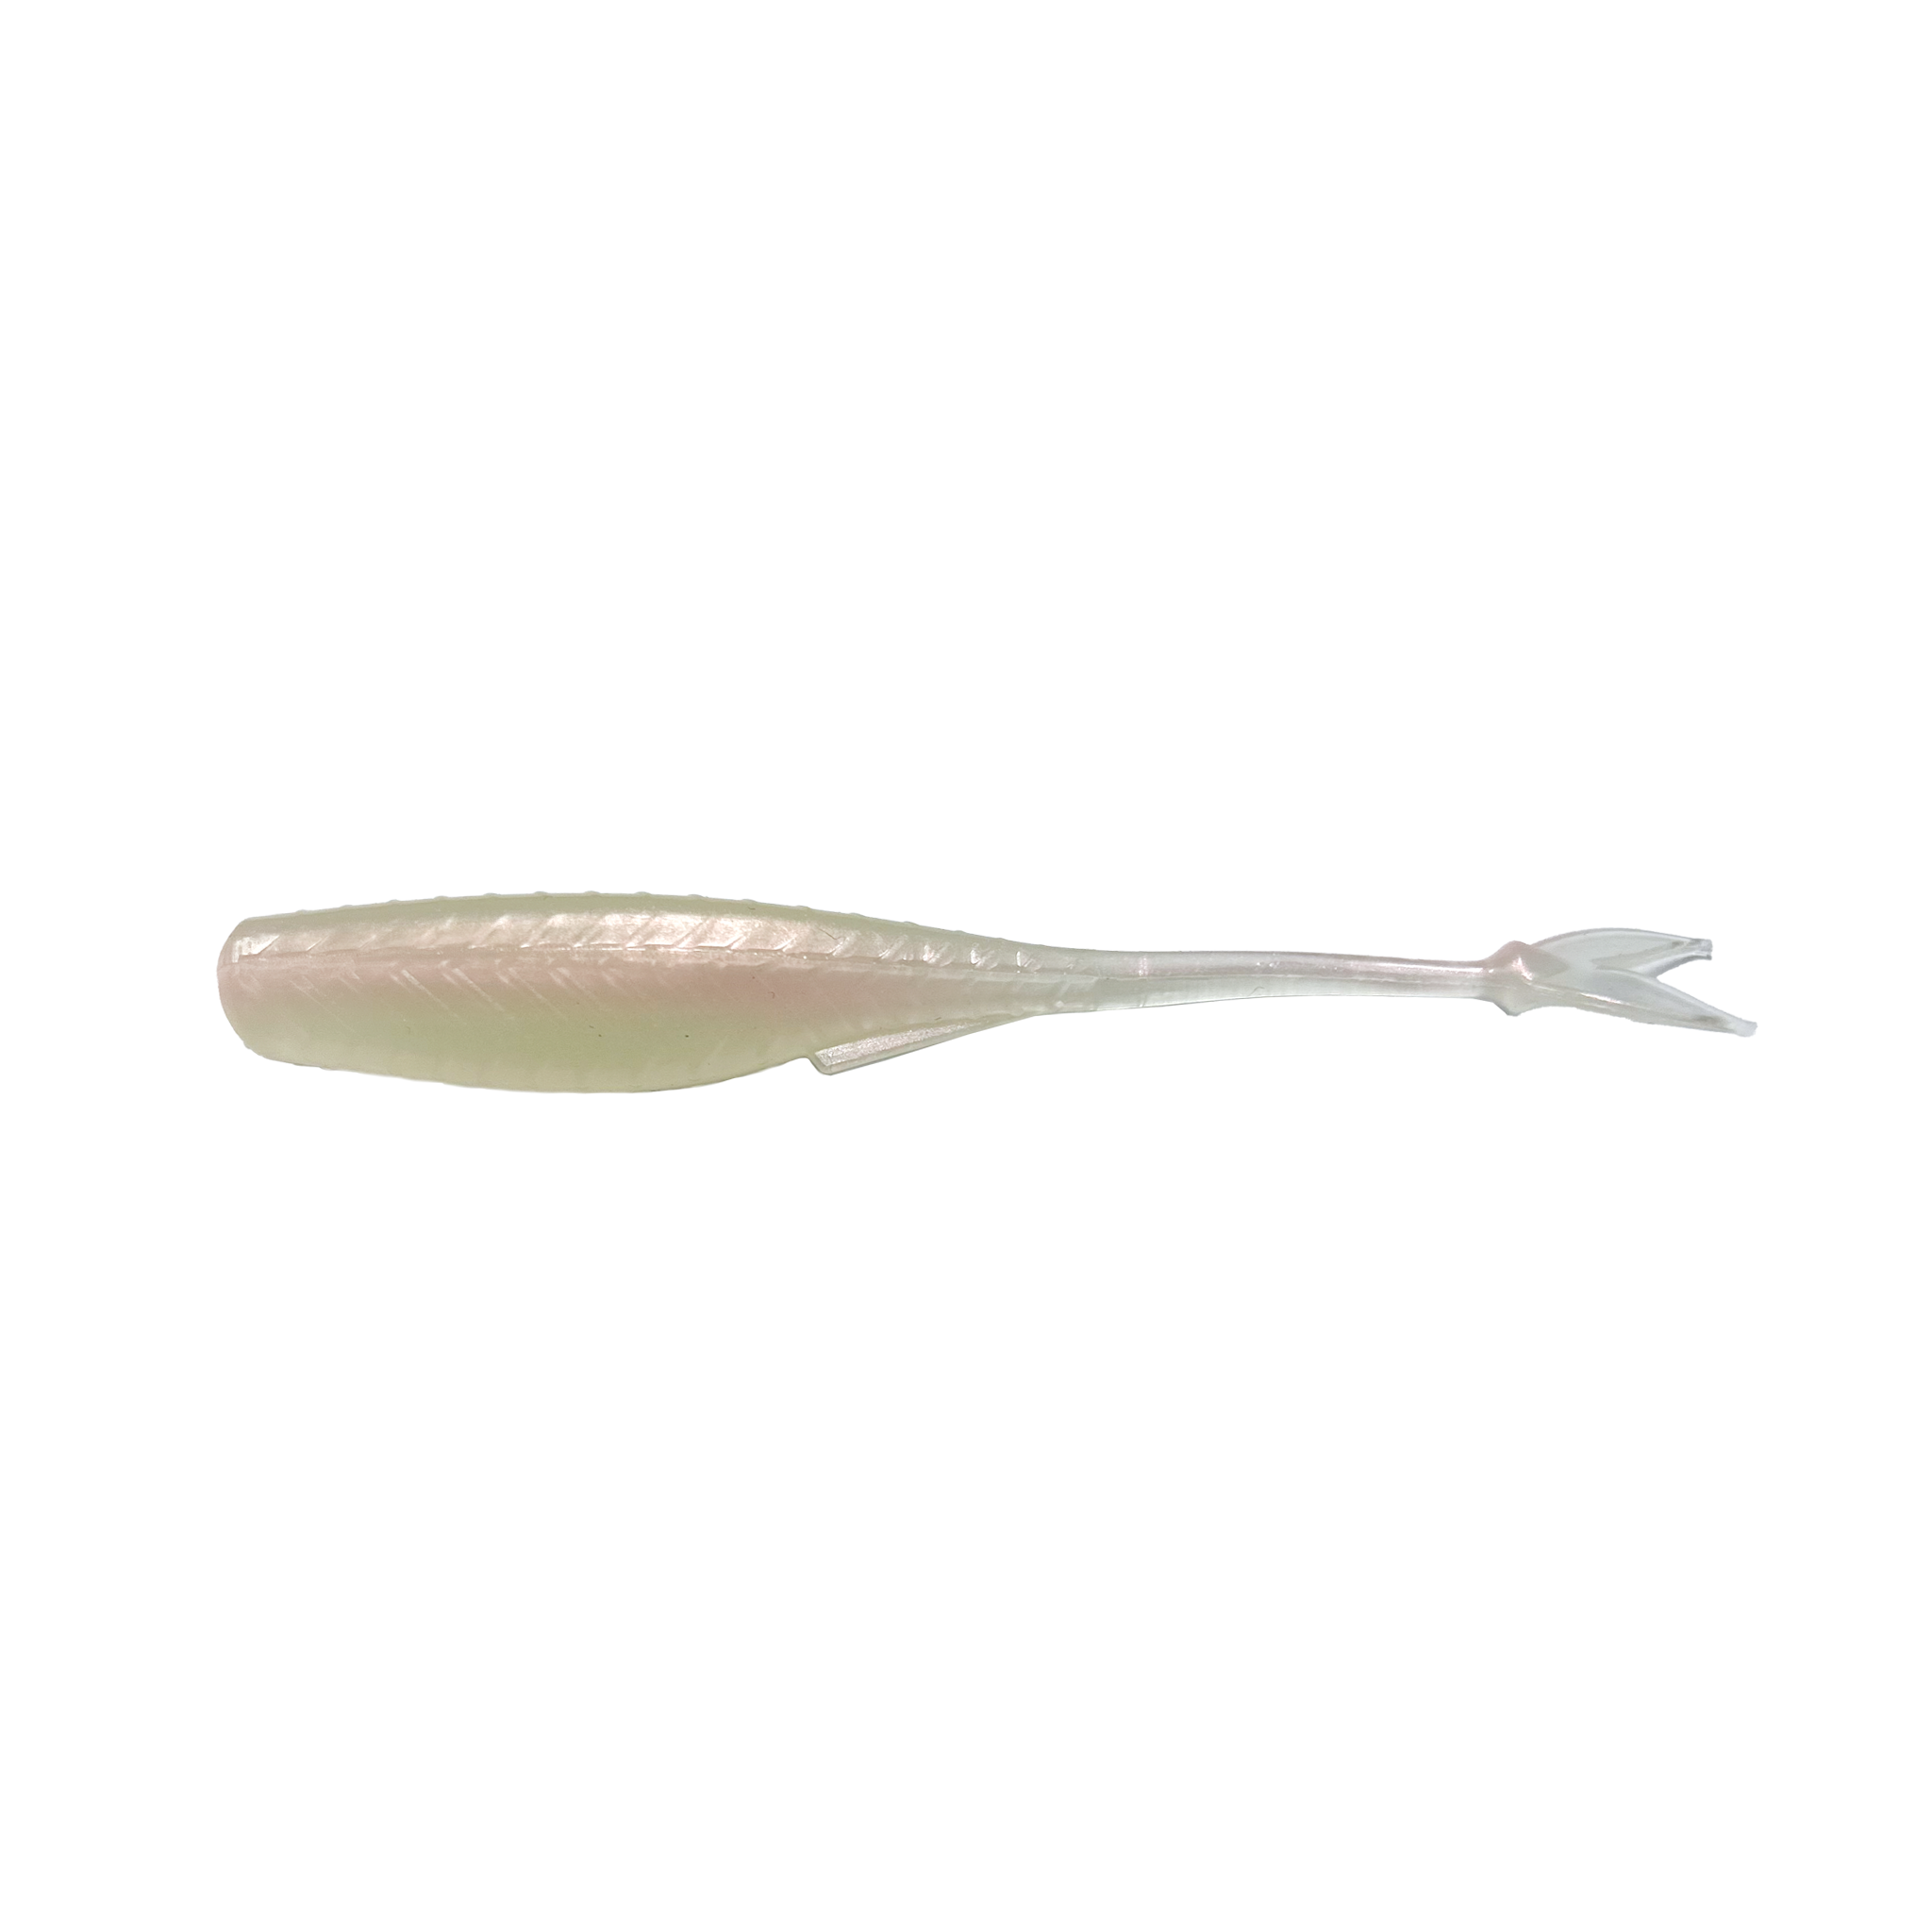 6th Sense Fishing - Soft Plastics - Juggle Minnow - Spanish Bone